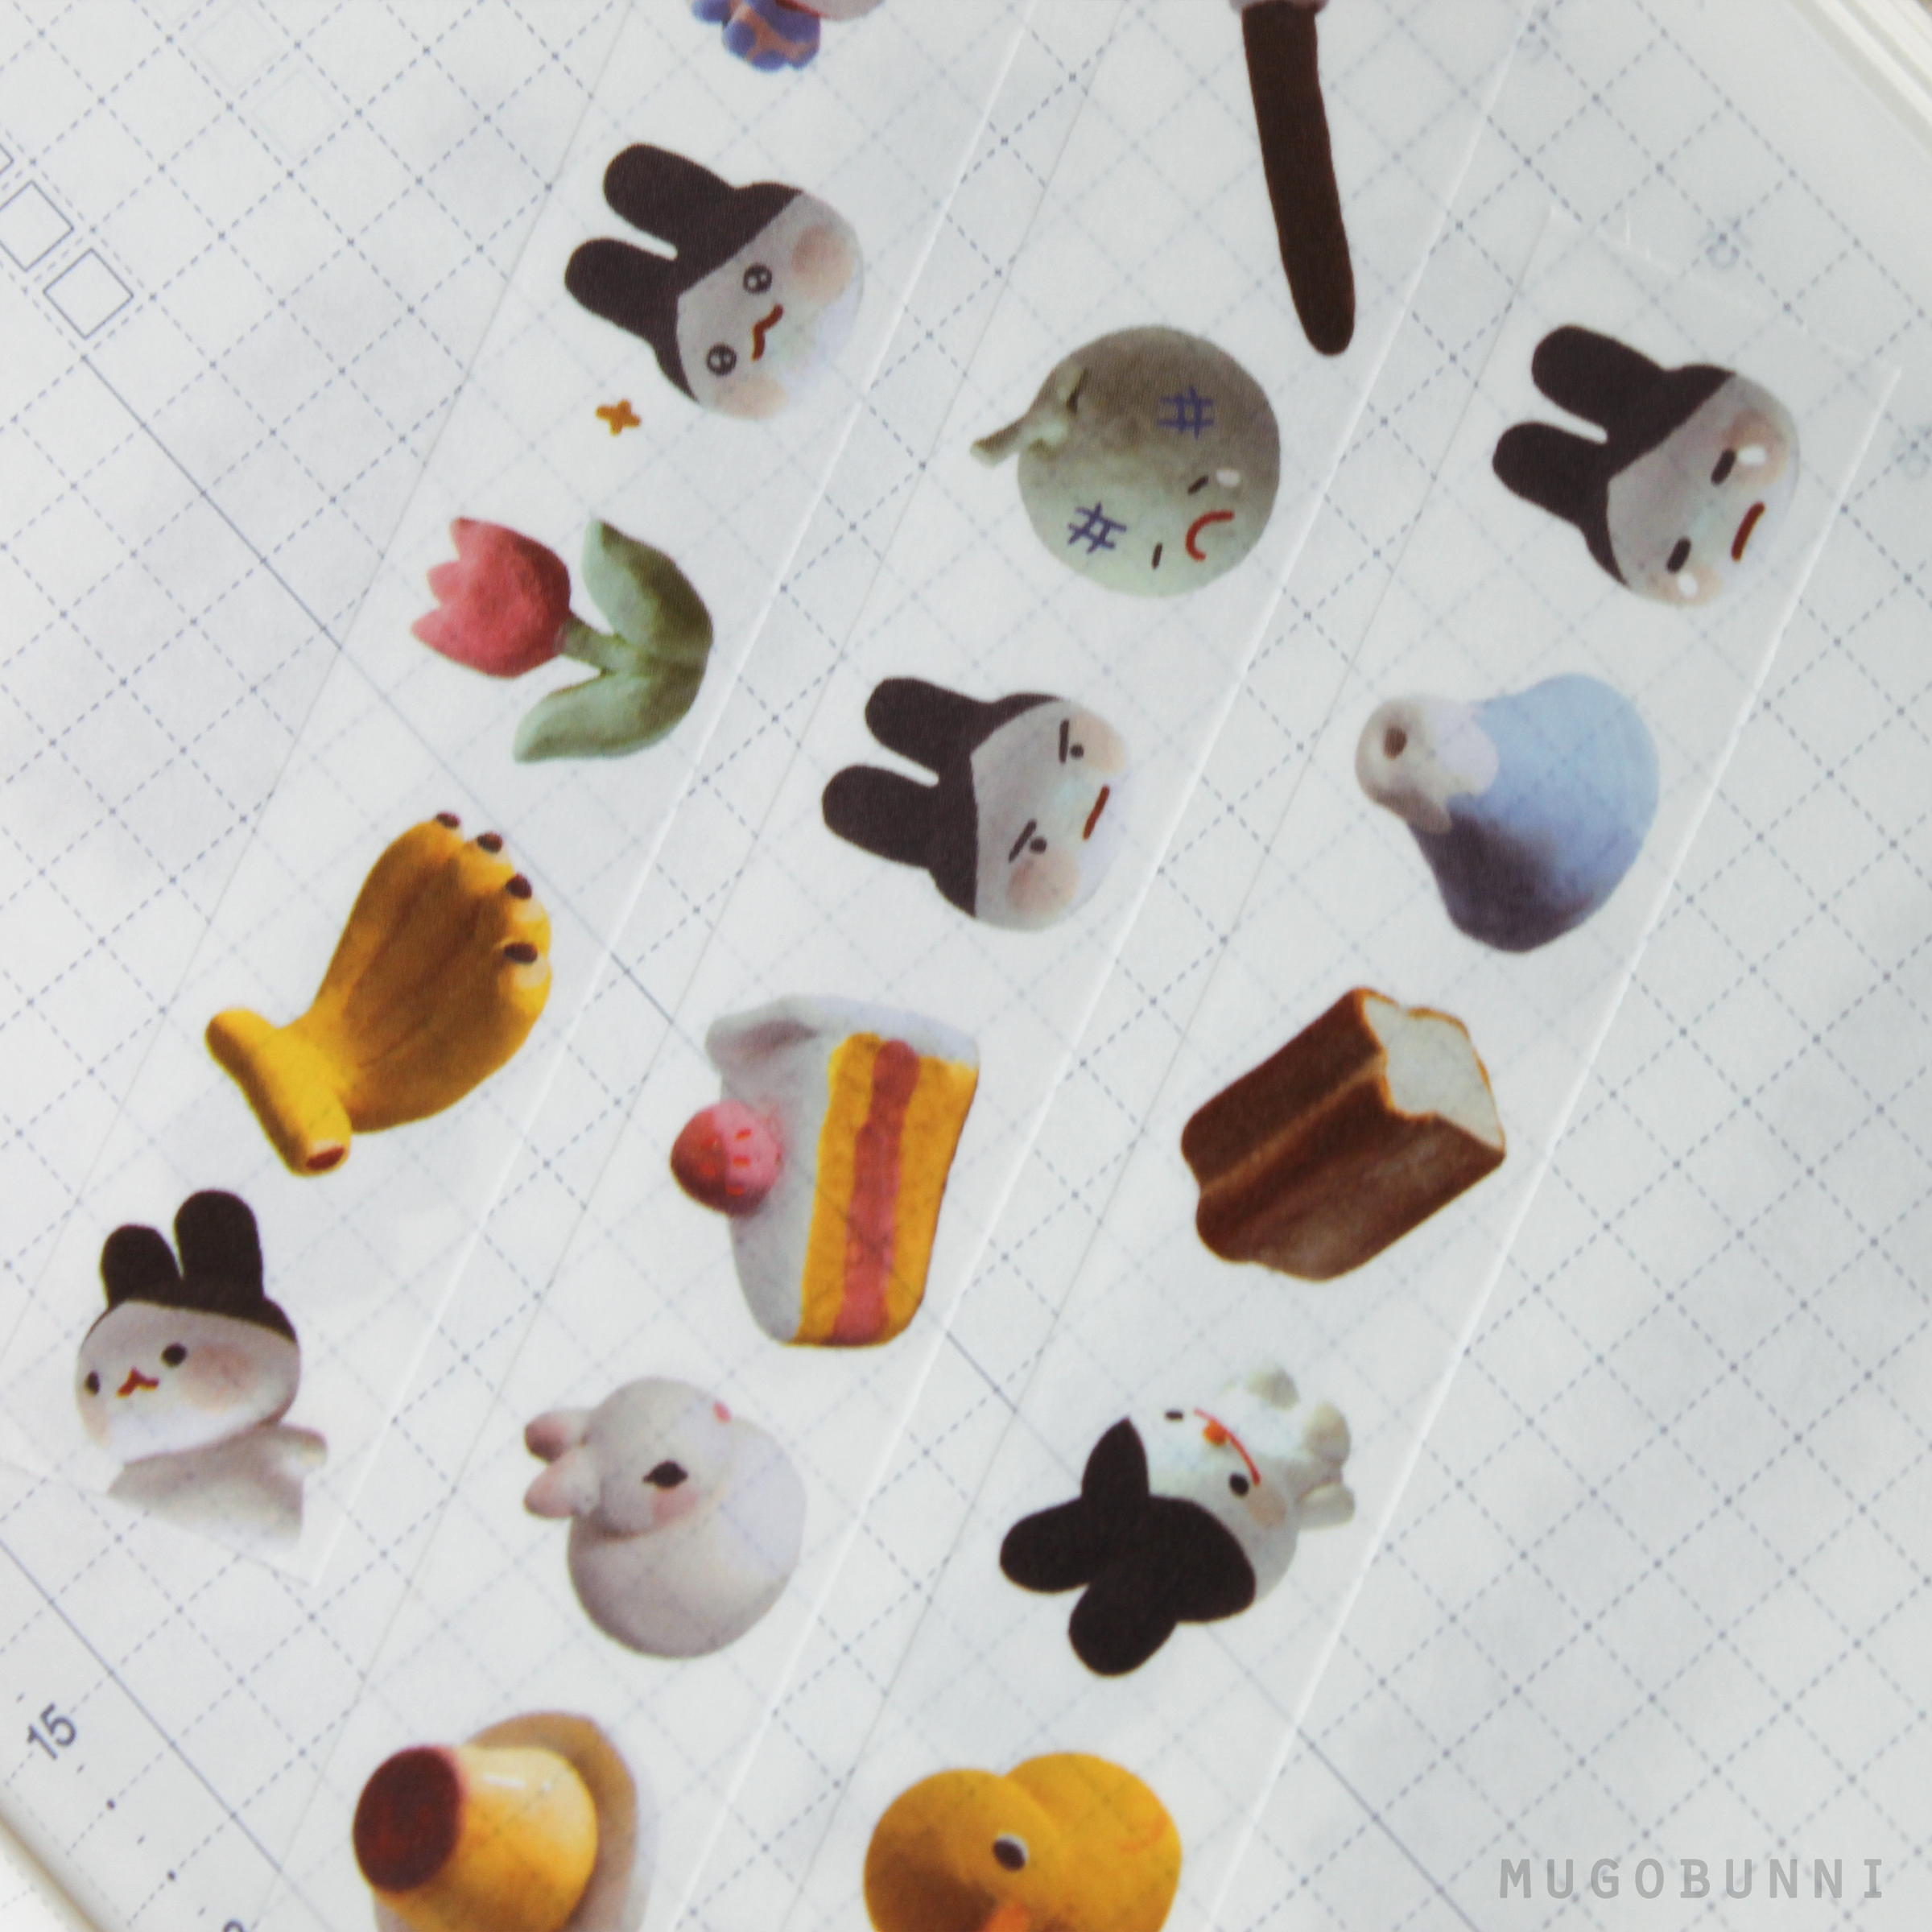 Japanese Washi Tape Bookmark Handmade Resin Bookmark Calypso Clay Design